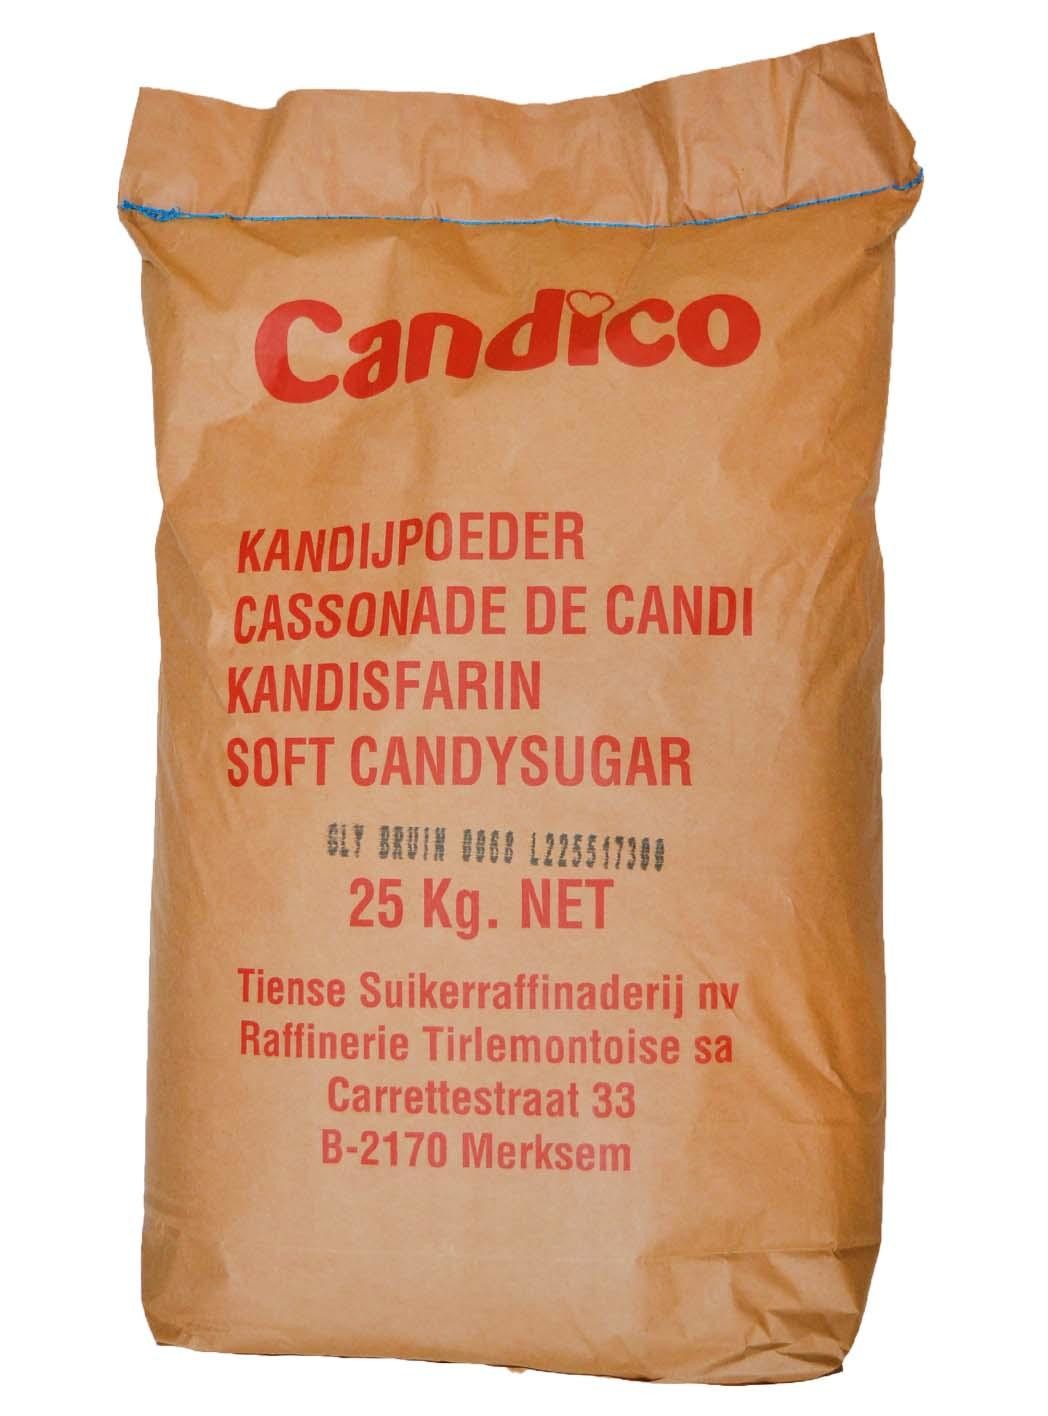 Cassonade de candi brune foncé 25kg Candico